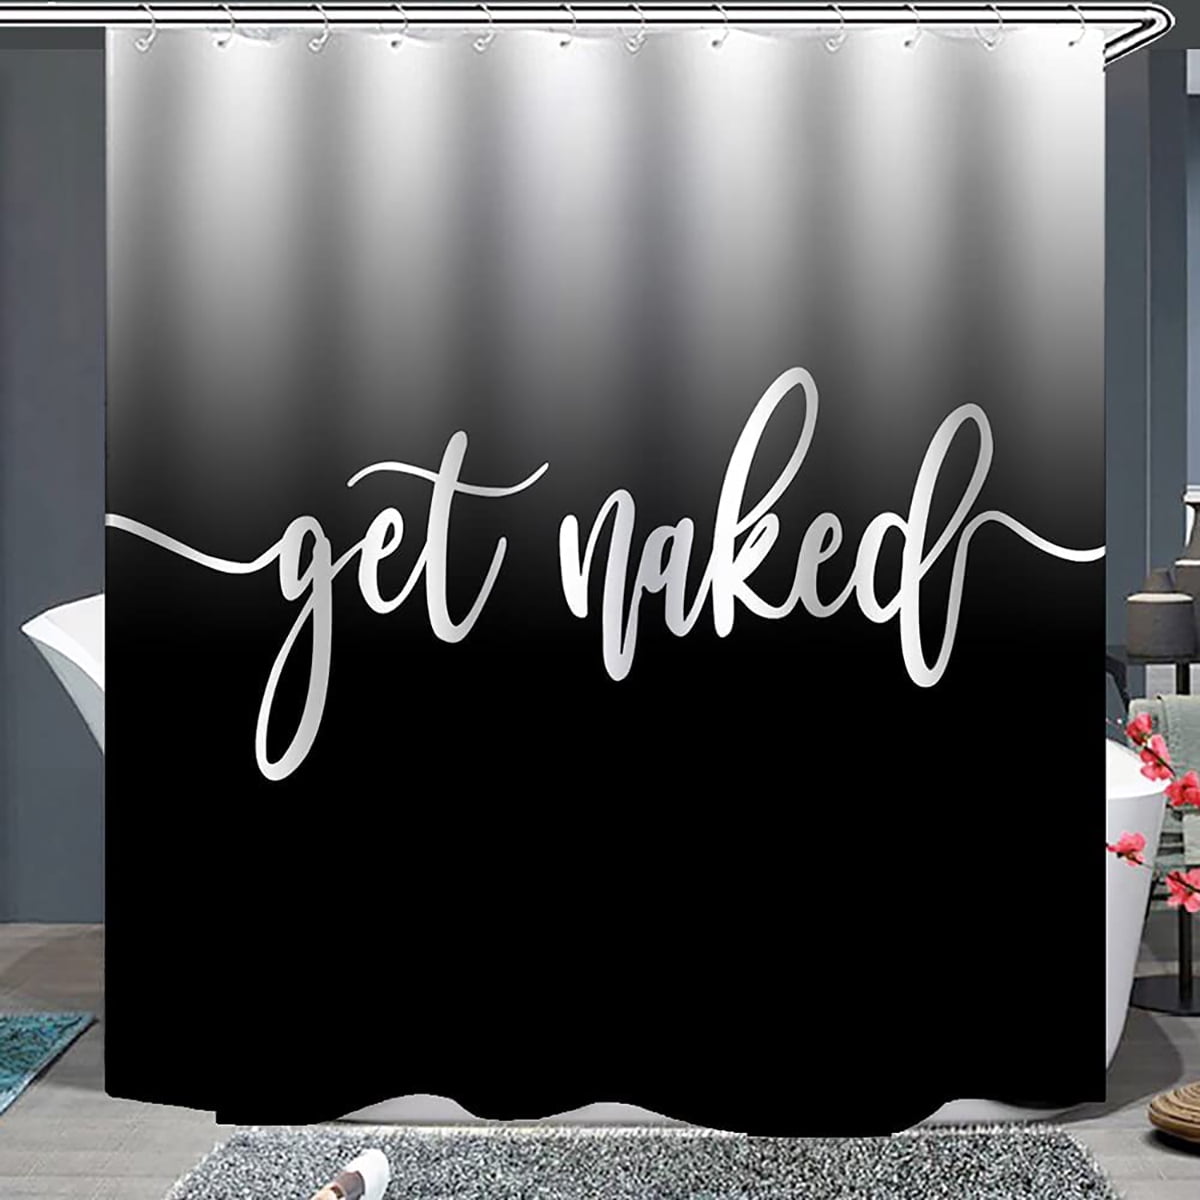 Waterproof Fabric Funny Slang Shower Curtain Liner Bathroom Hooks-"Get Naked"